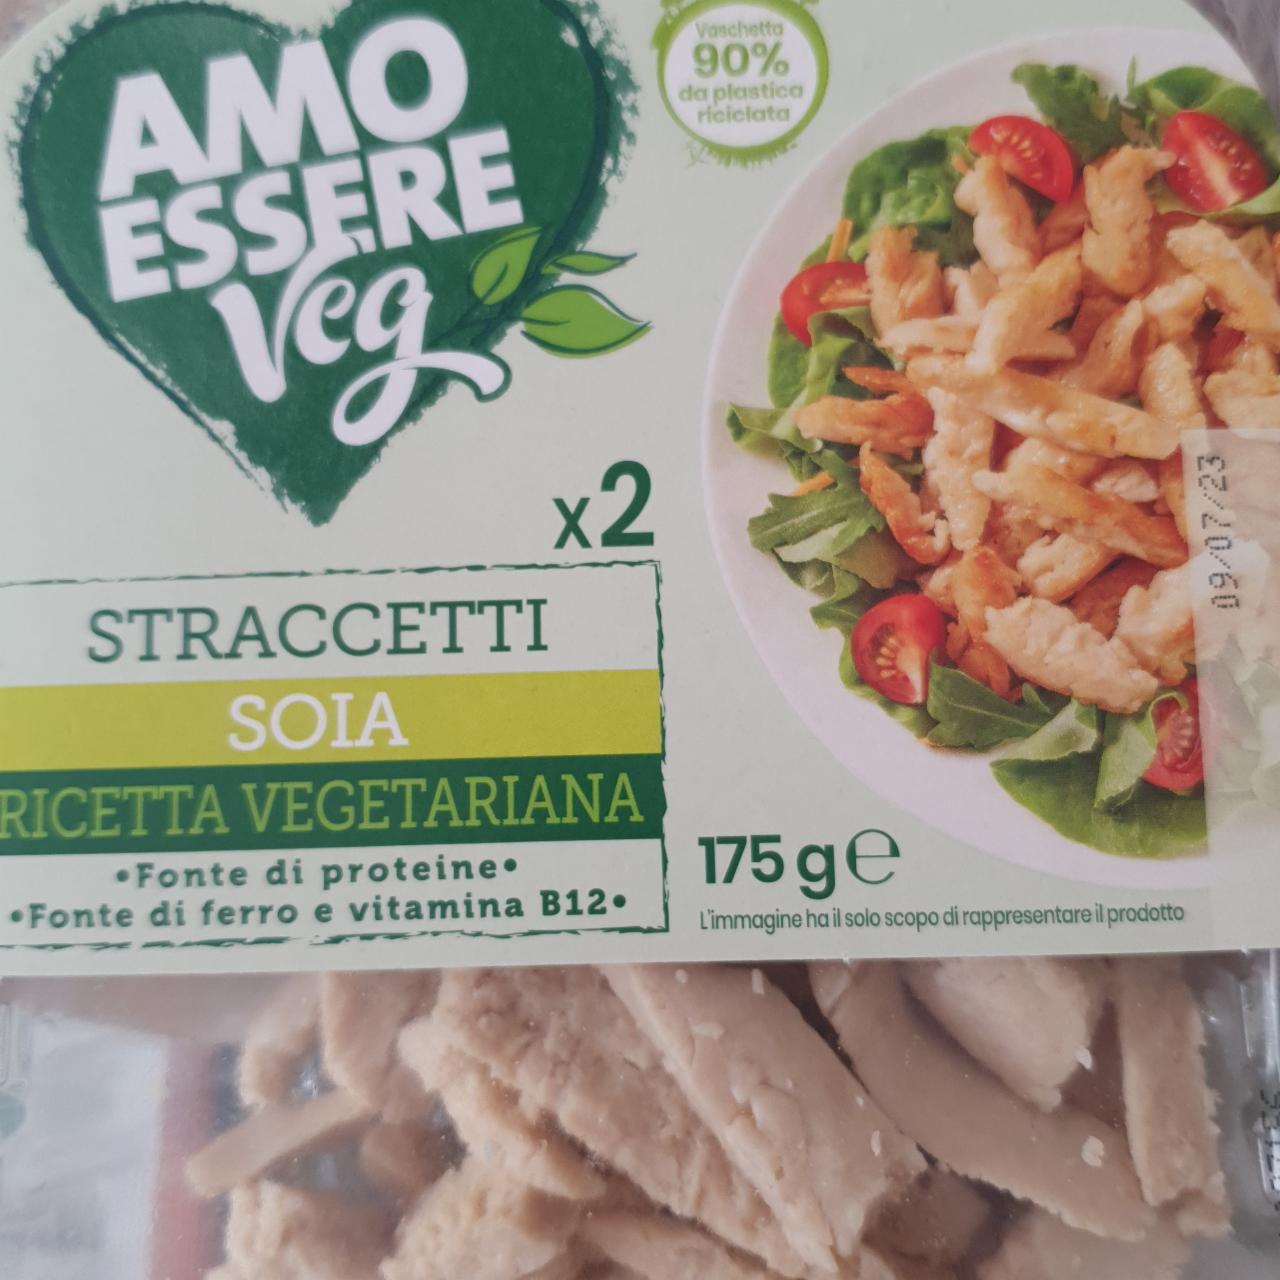 Фото - вегетерианские соевые стрипсы straccetti soia Amo essere Veg